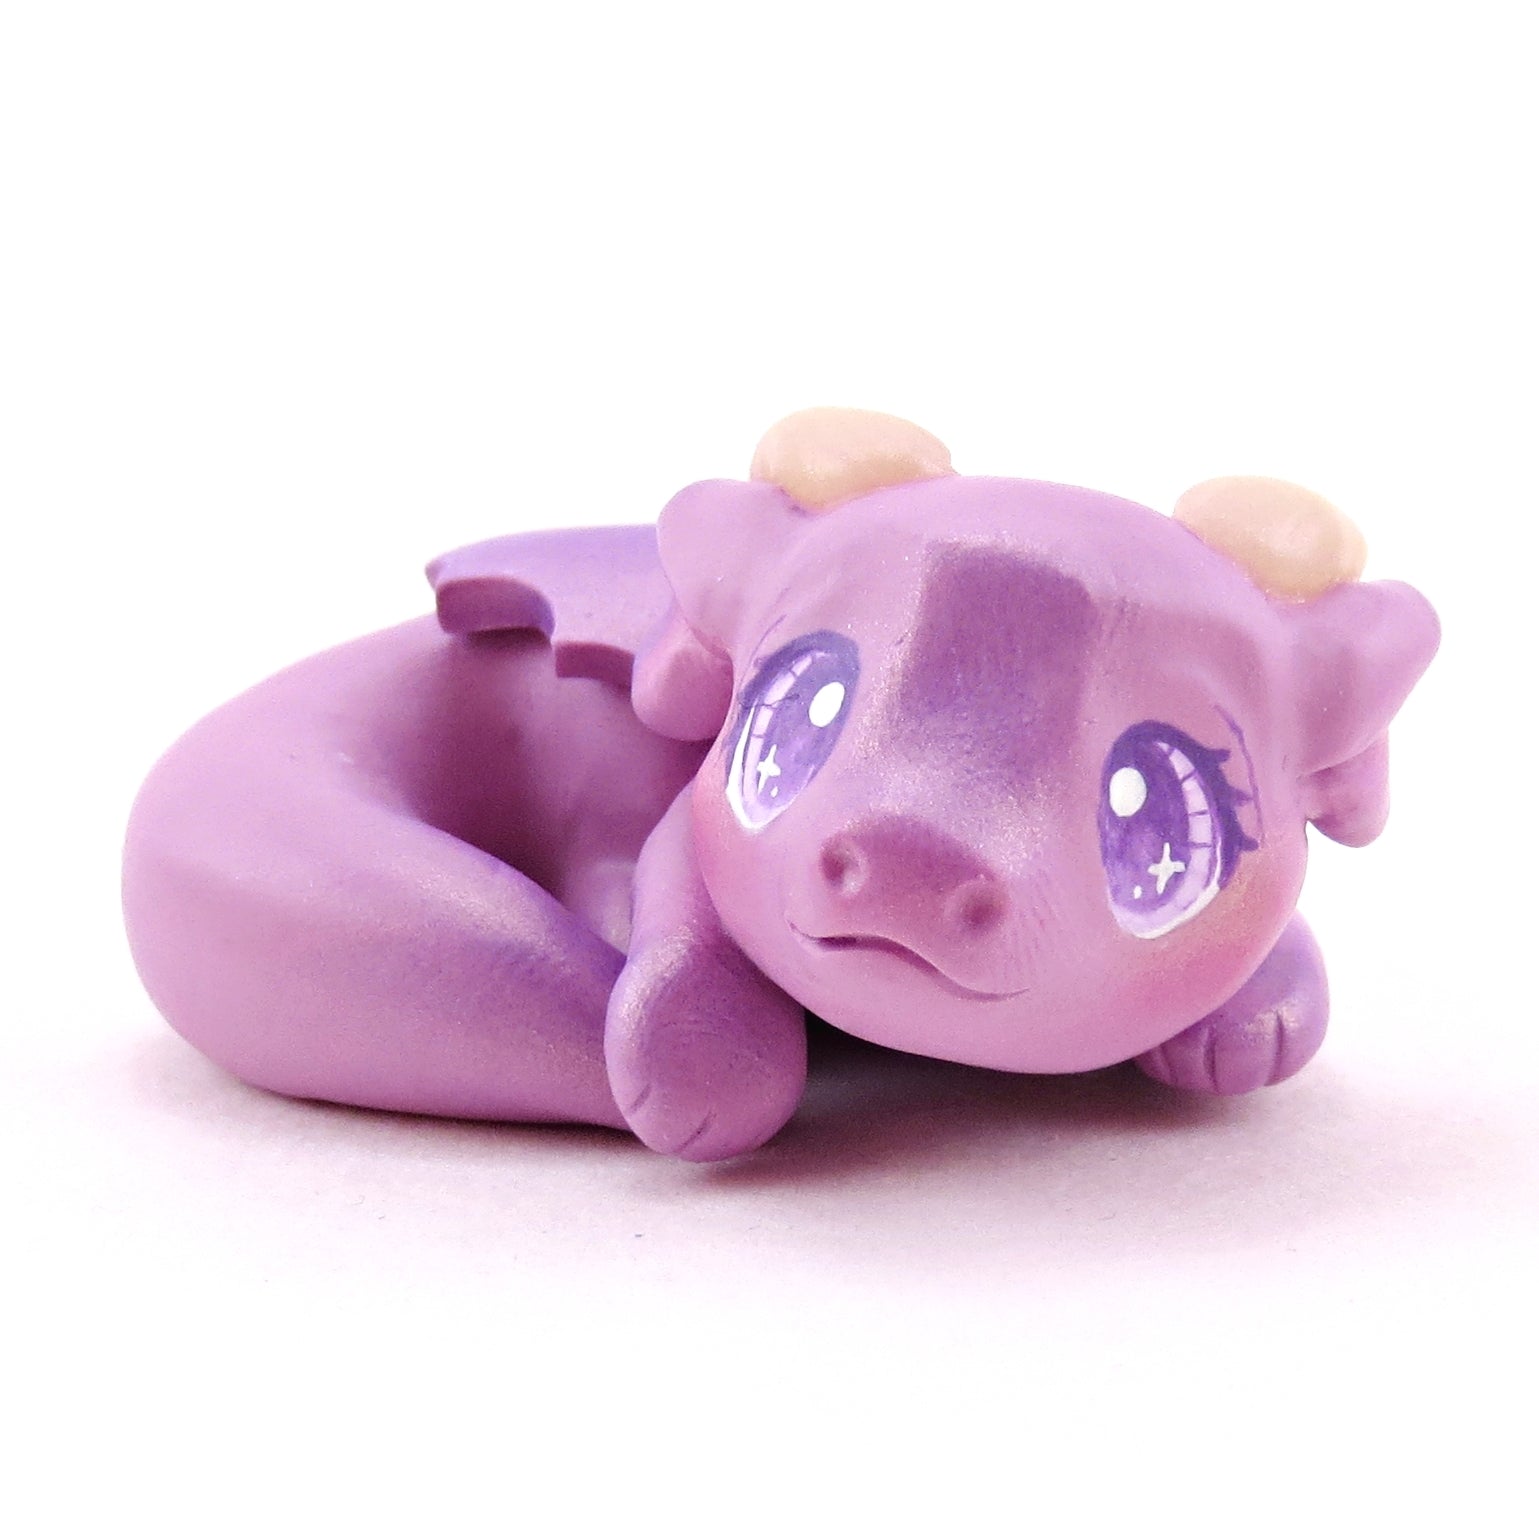 Sleepy Lilac Purple Baby Dragon Figurine - Polymer Clay Animals Fairytale Spring Collection